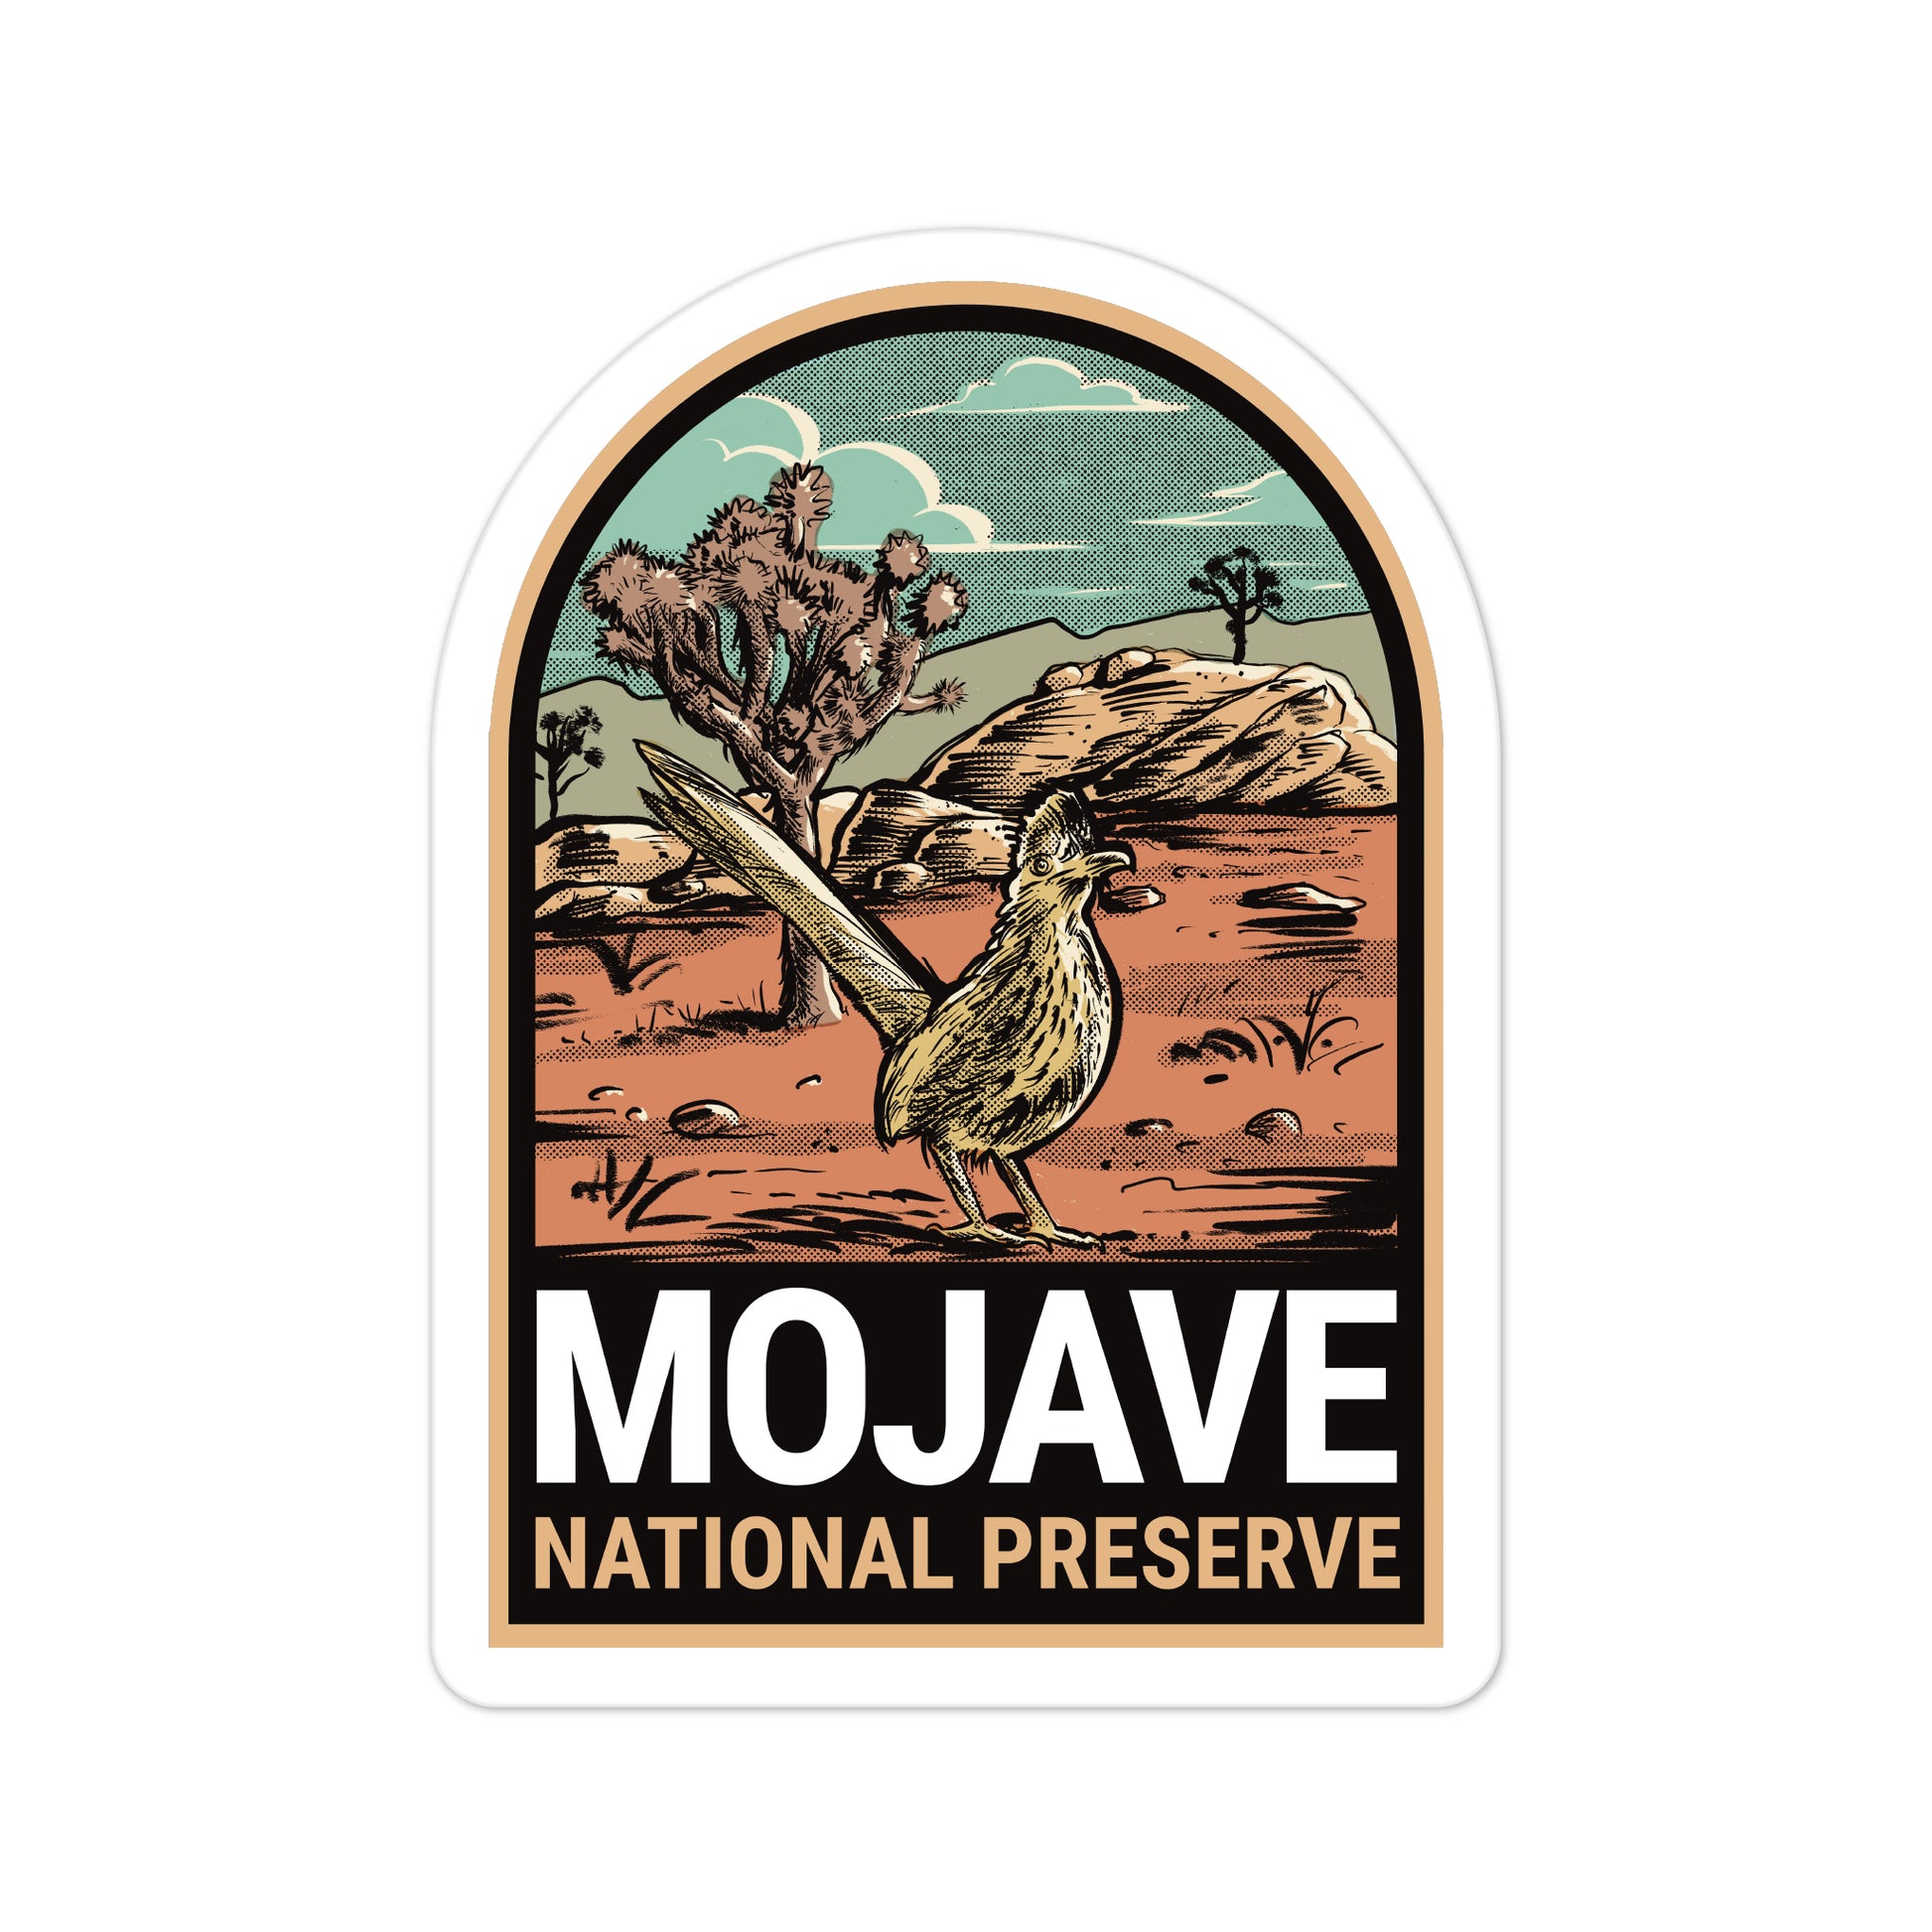 A sticker of Mojave National Preserve